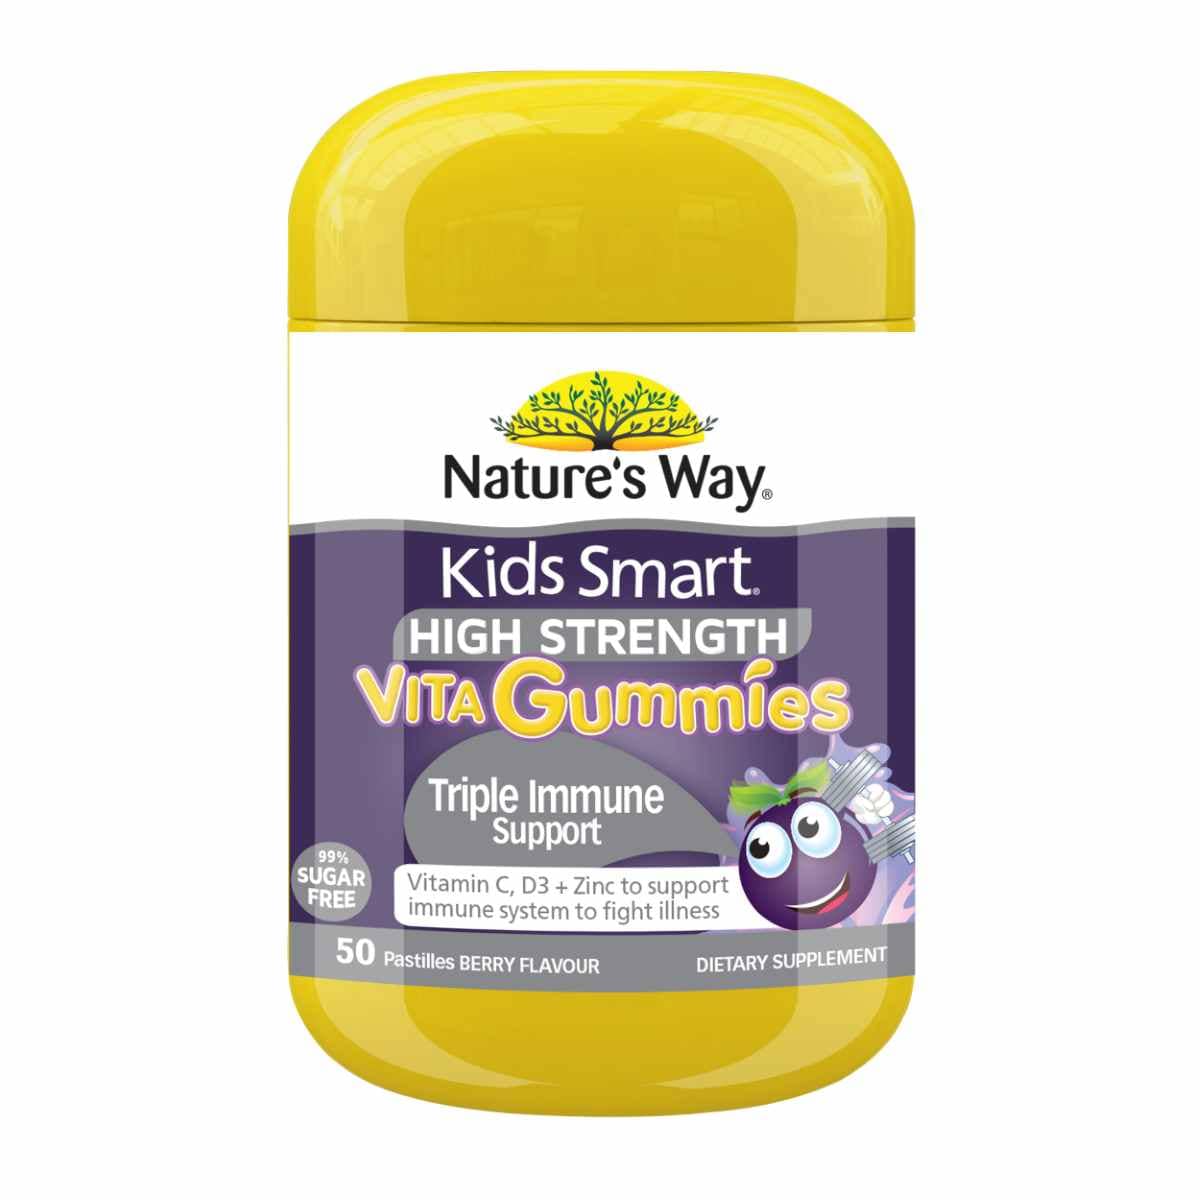 Natures Way Kids Smart High Strength Vita Gummies Triple Immune Support 50 Pack